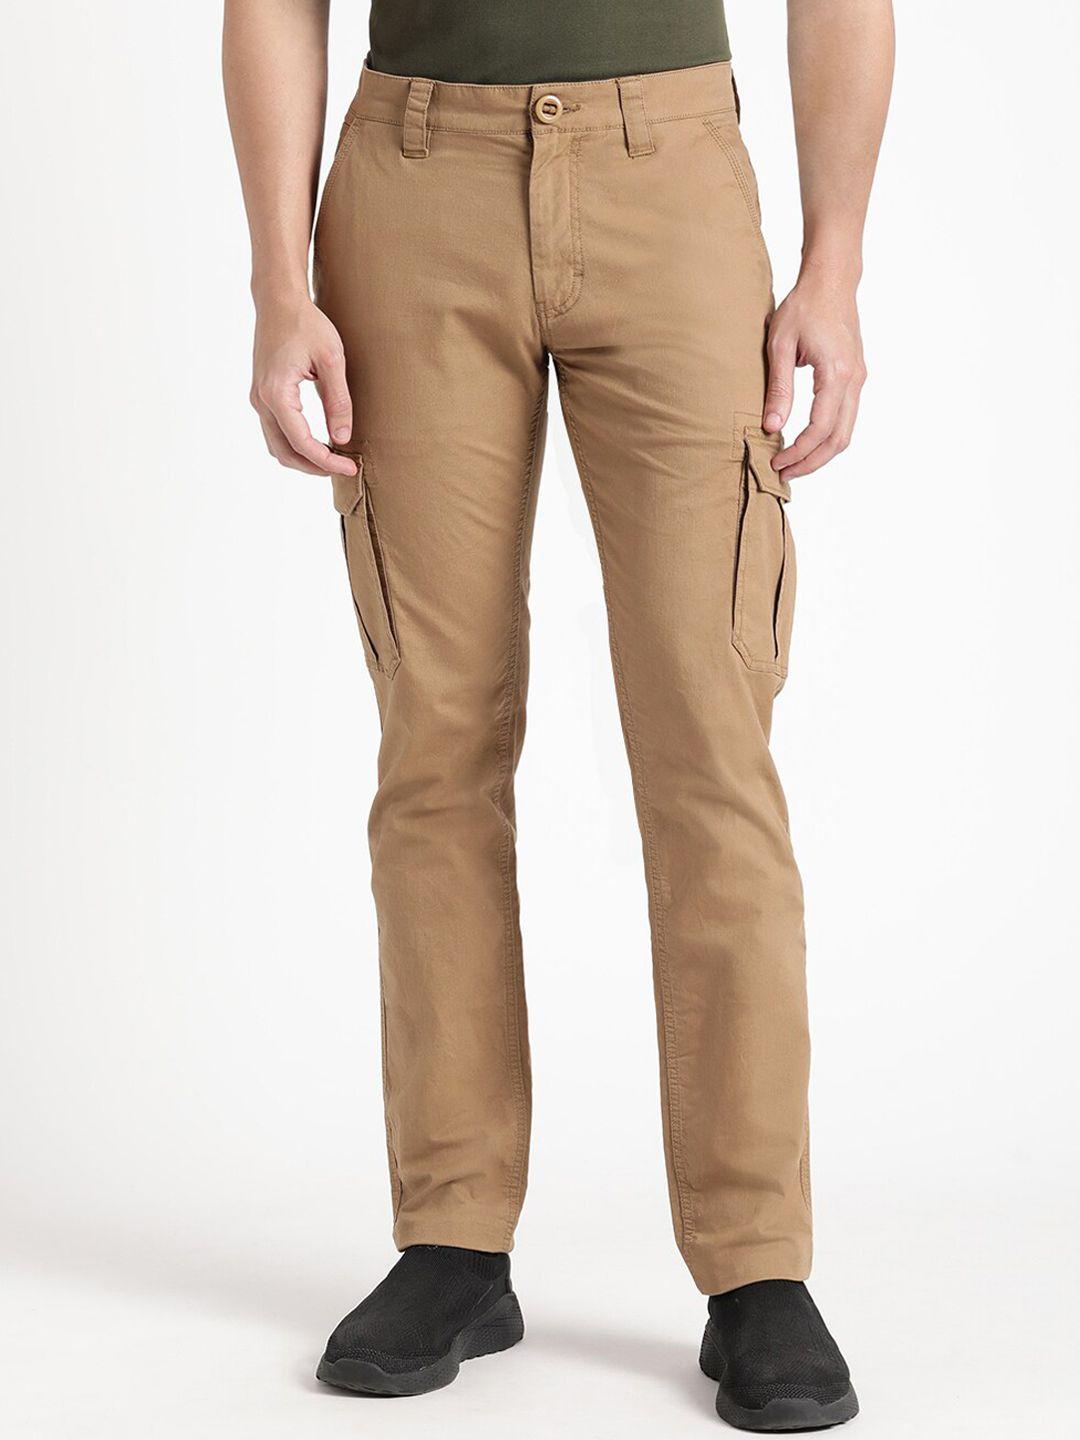 wildcraft-men-mid-rise-cotton-cargos-trousers